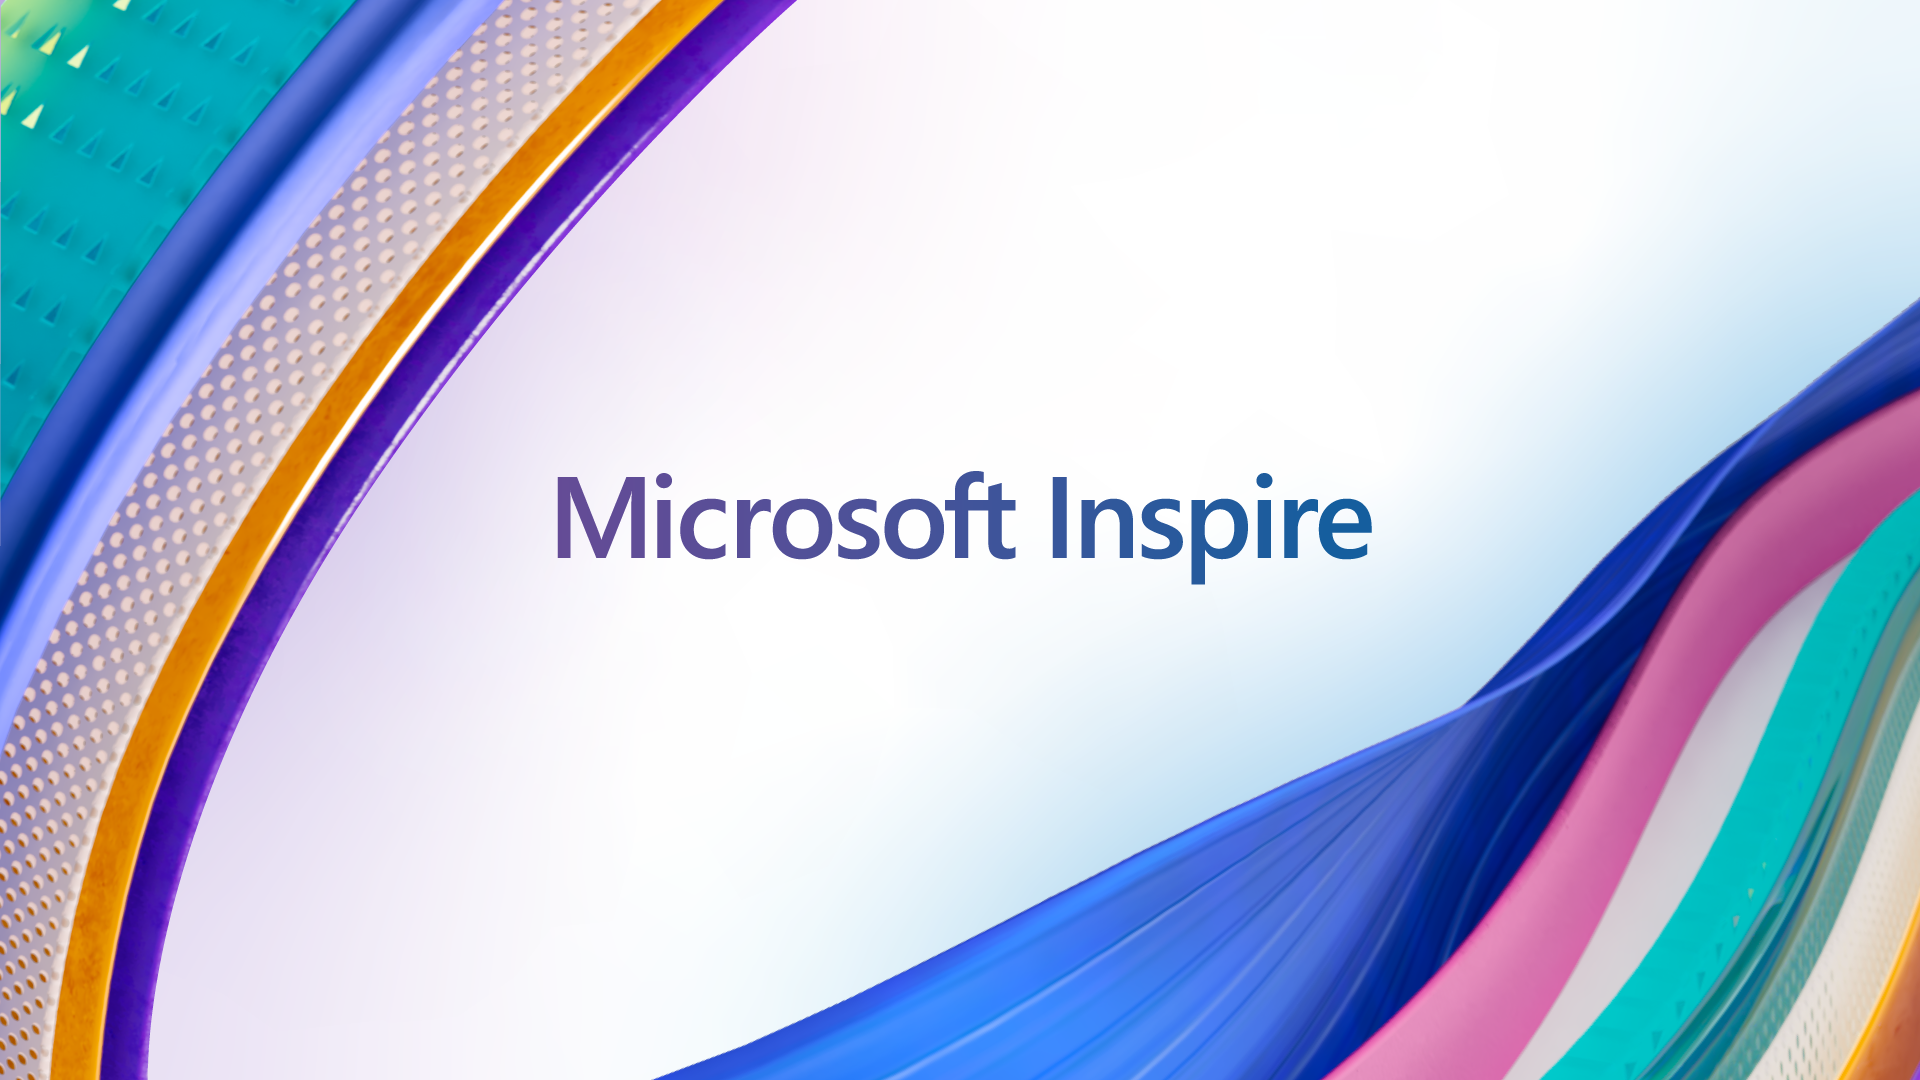 Graphic image of Microsoft Inspire logo